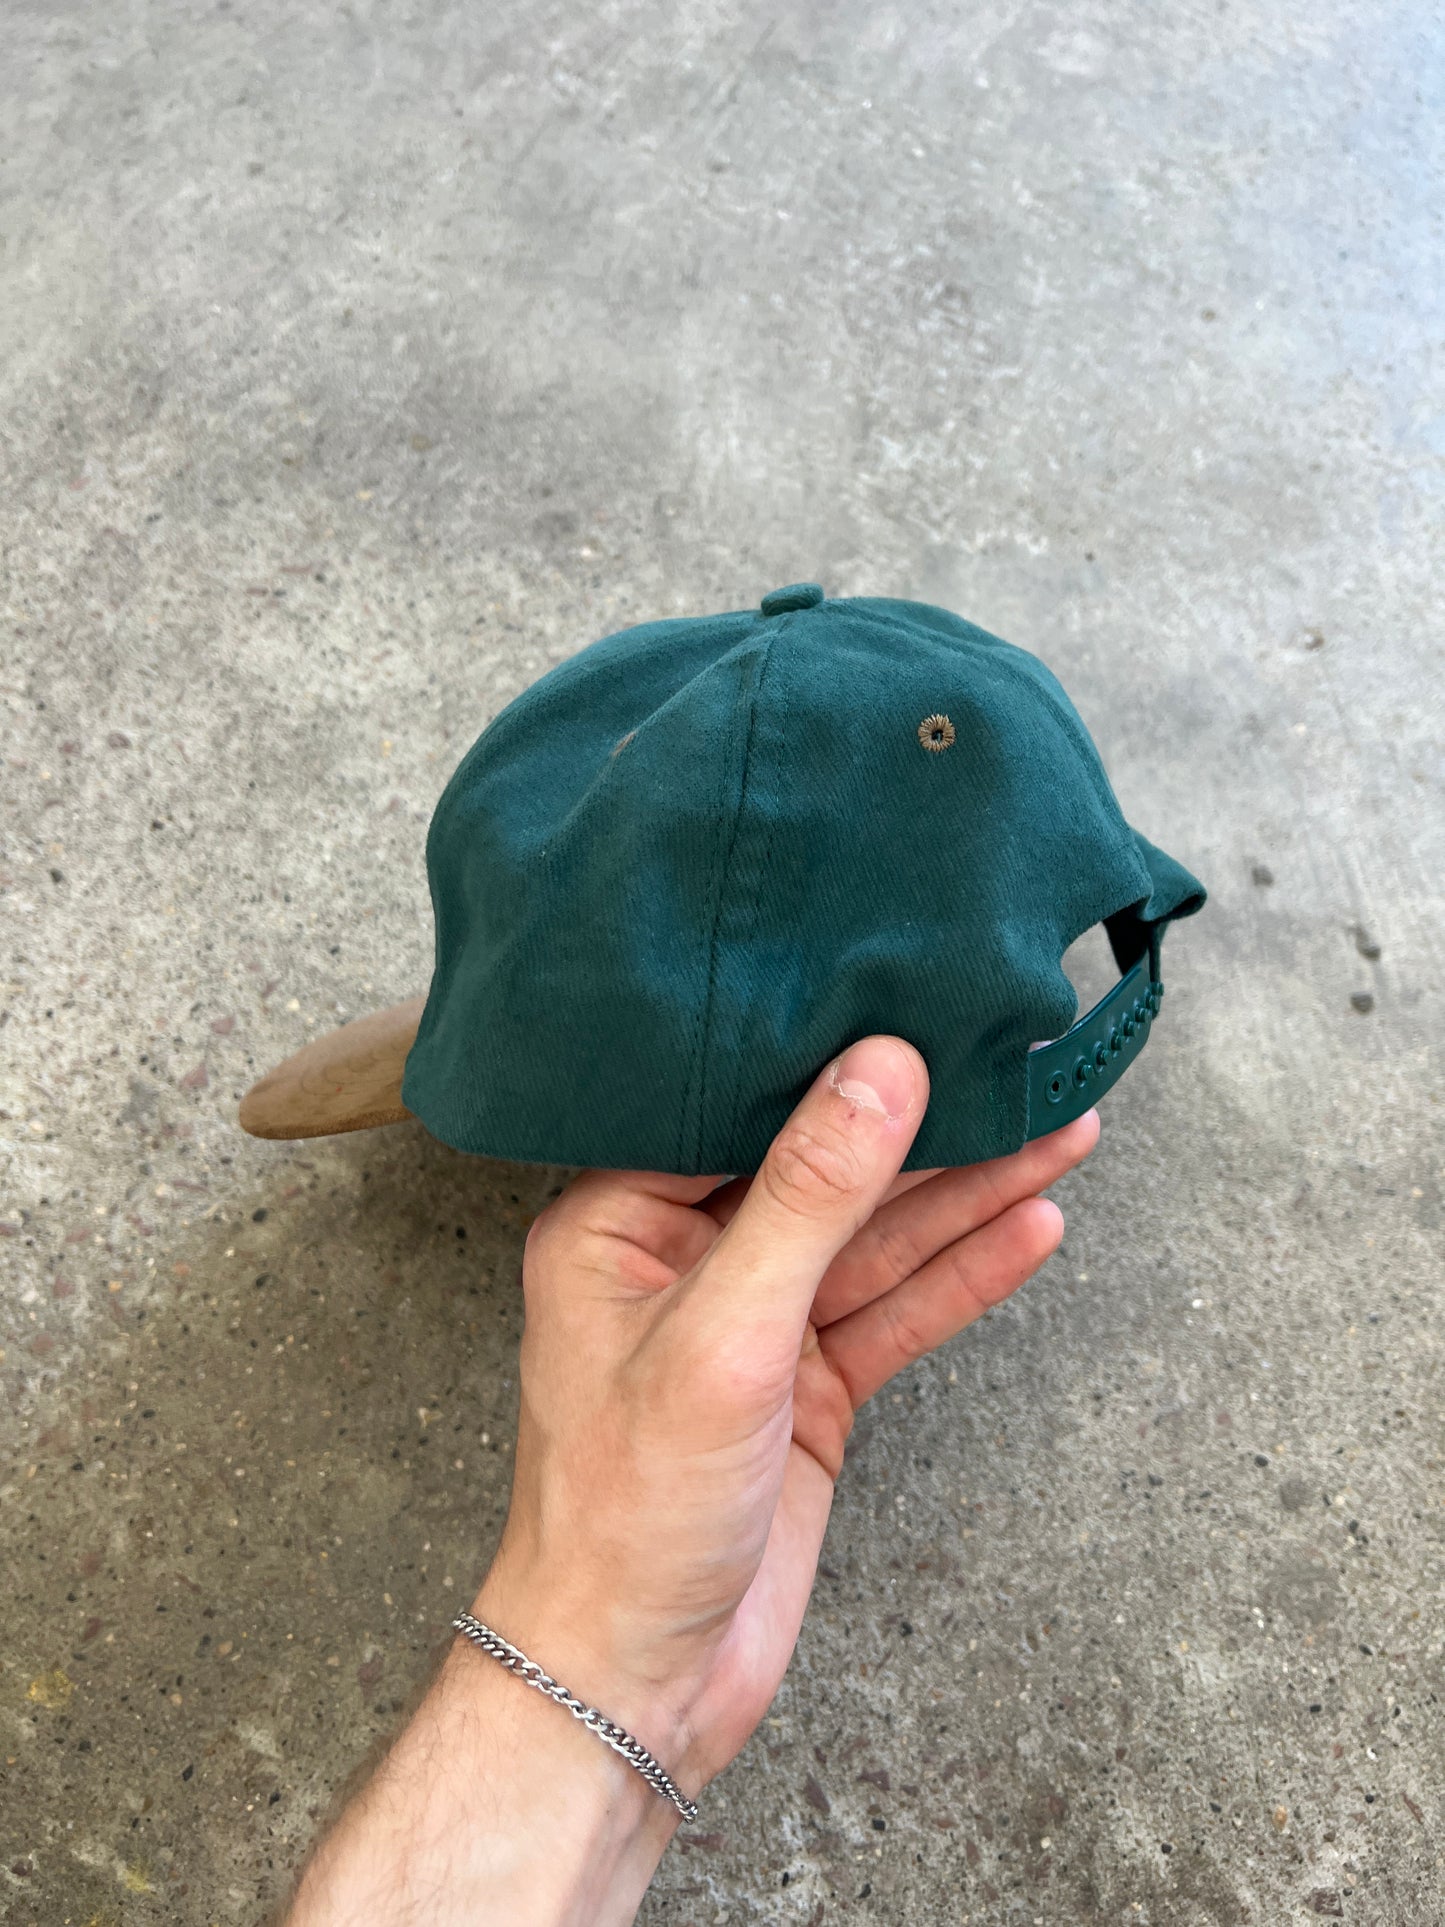 Vintage Green GMC Snapback Hat